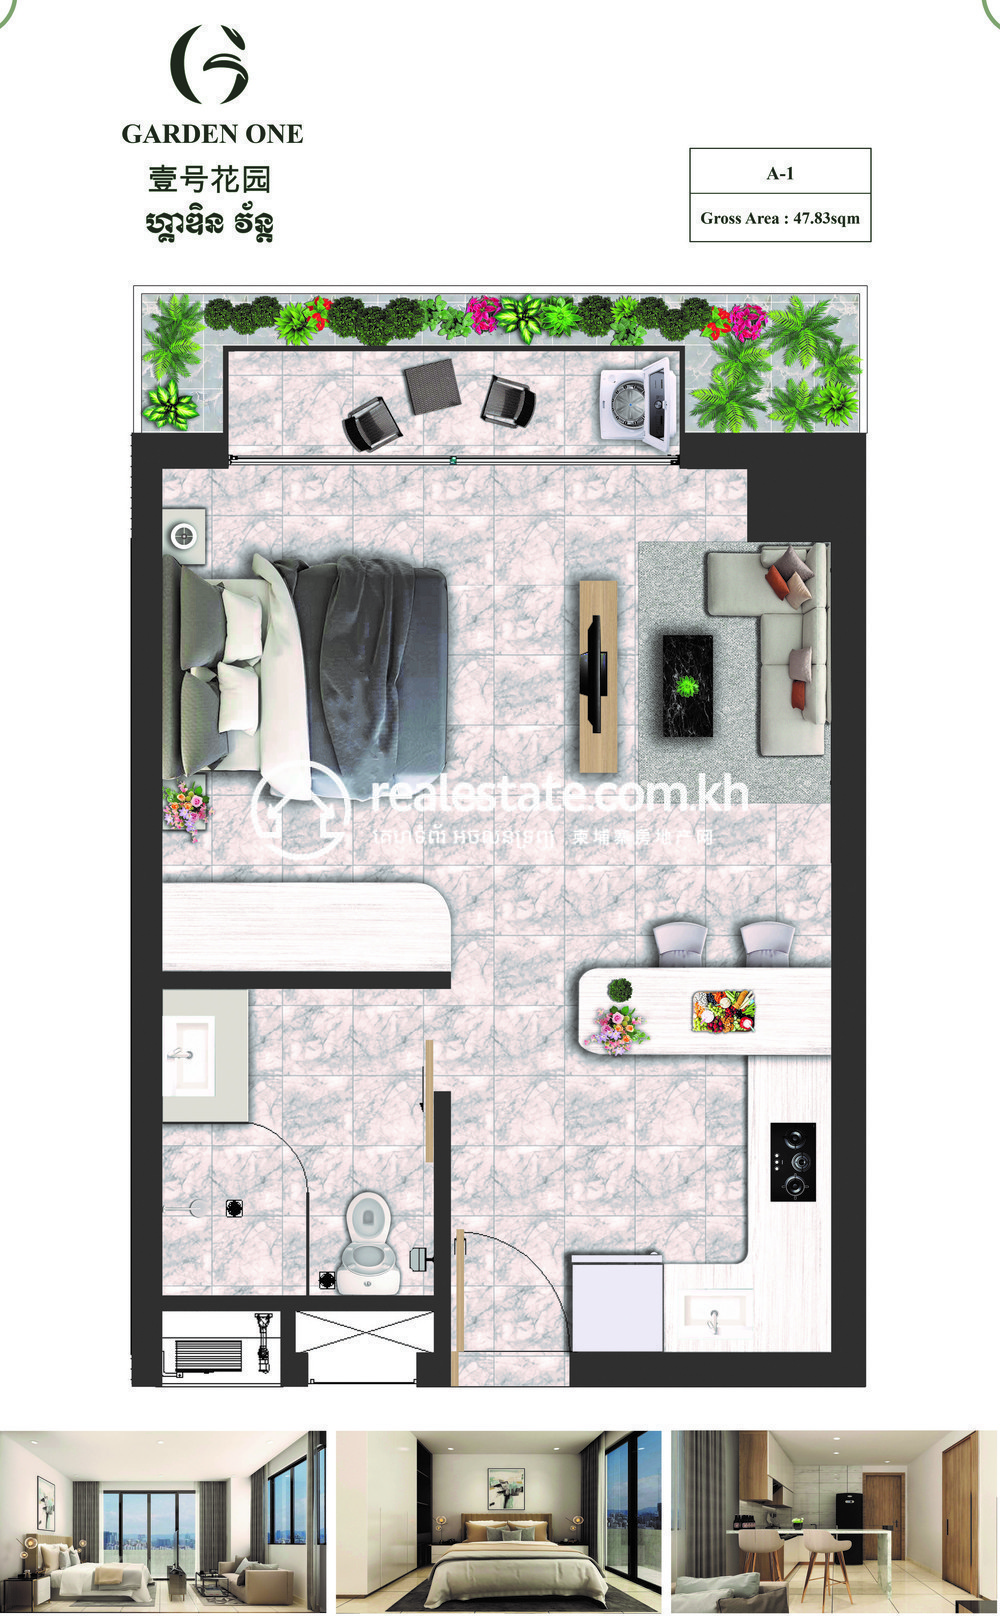 One Bedroom A-1.jpg